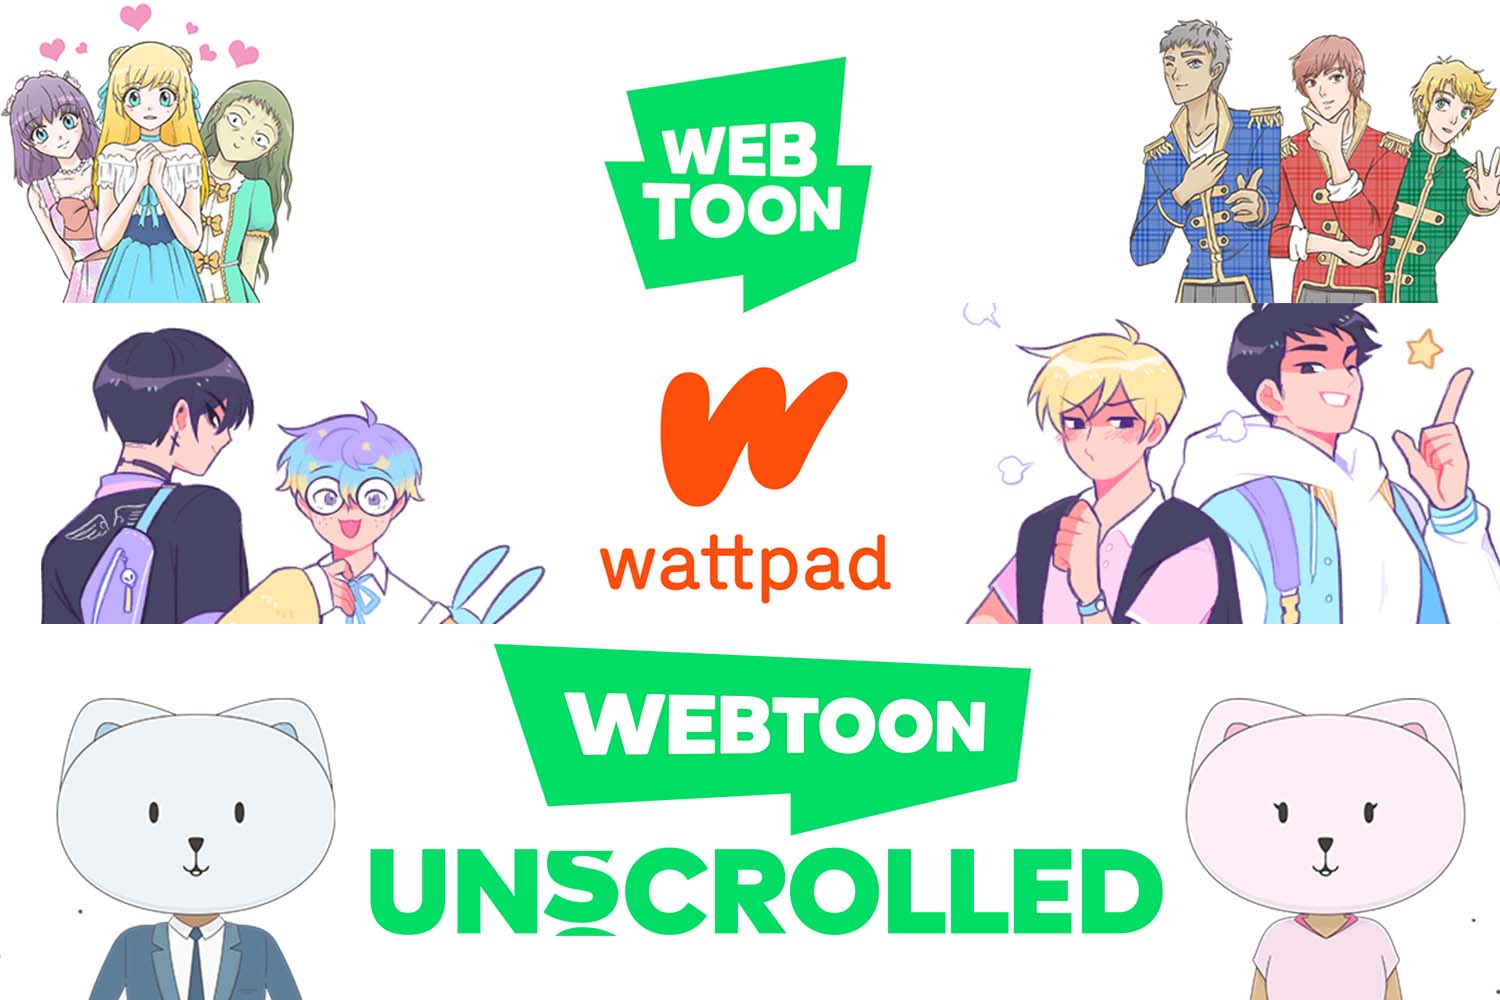 Webtoon expanding into print graphic novels with Webtoon Unscrolled